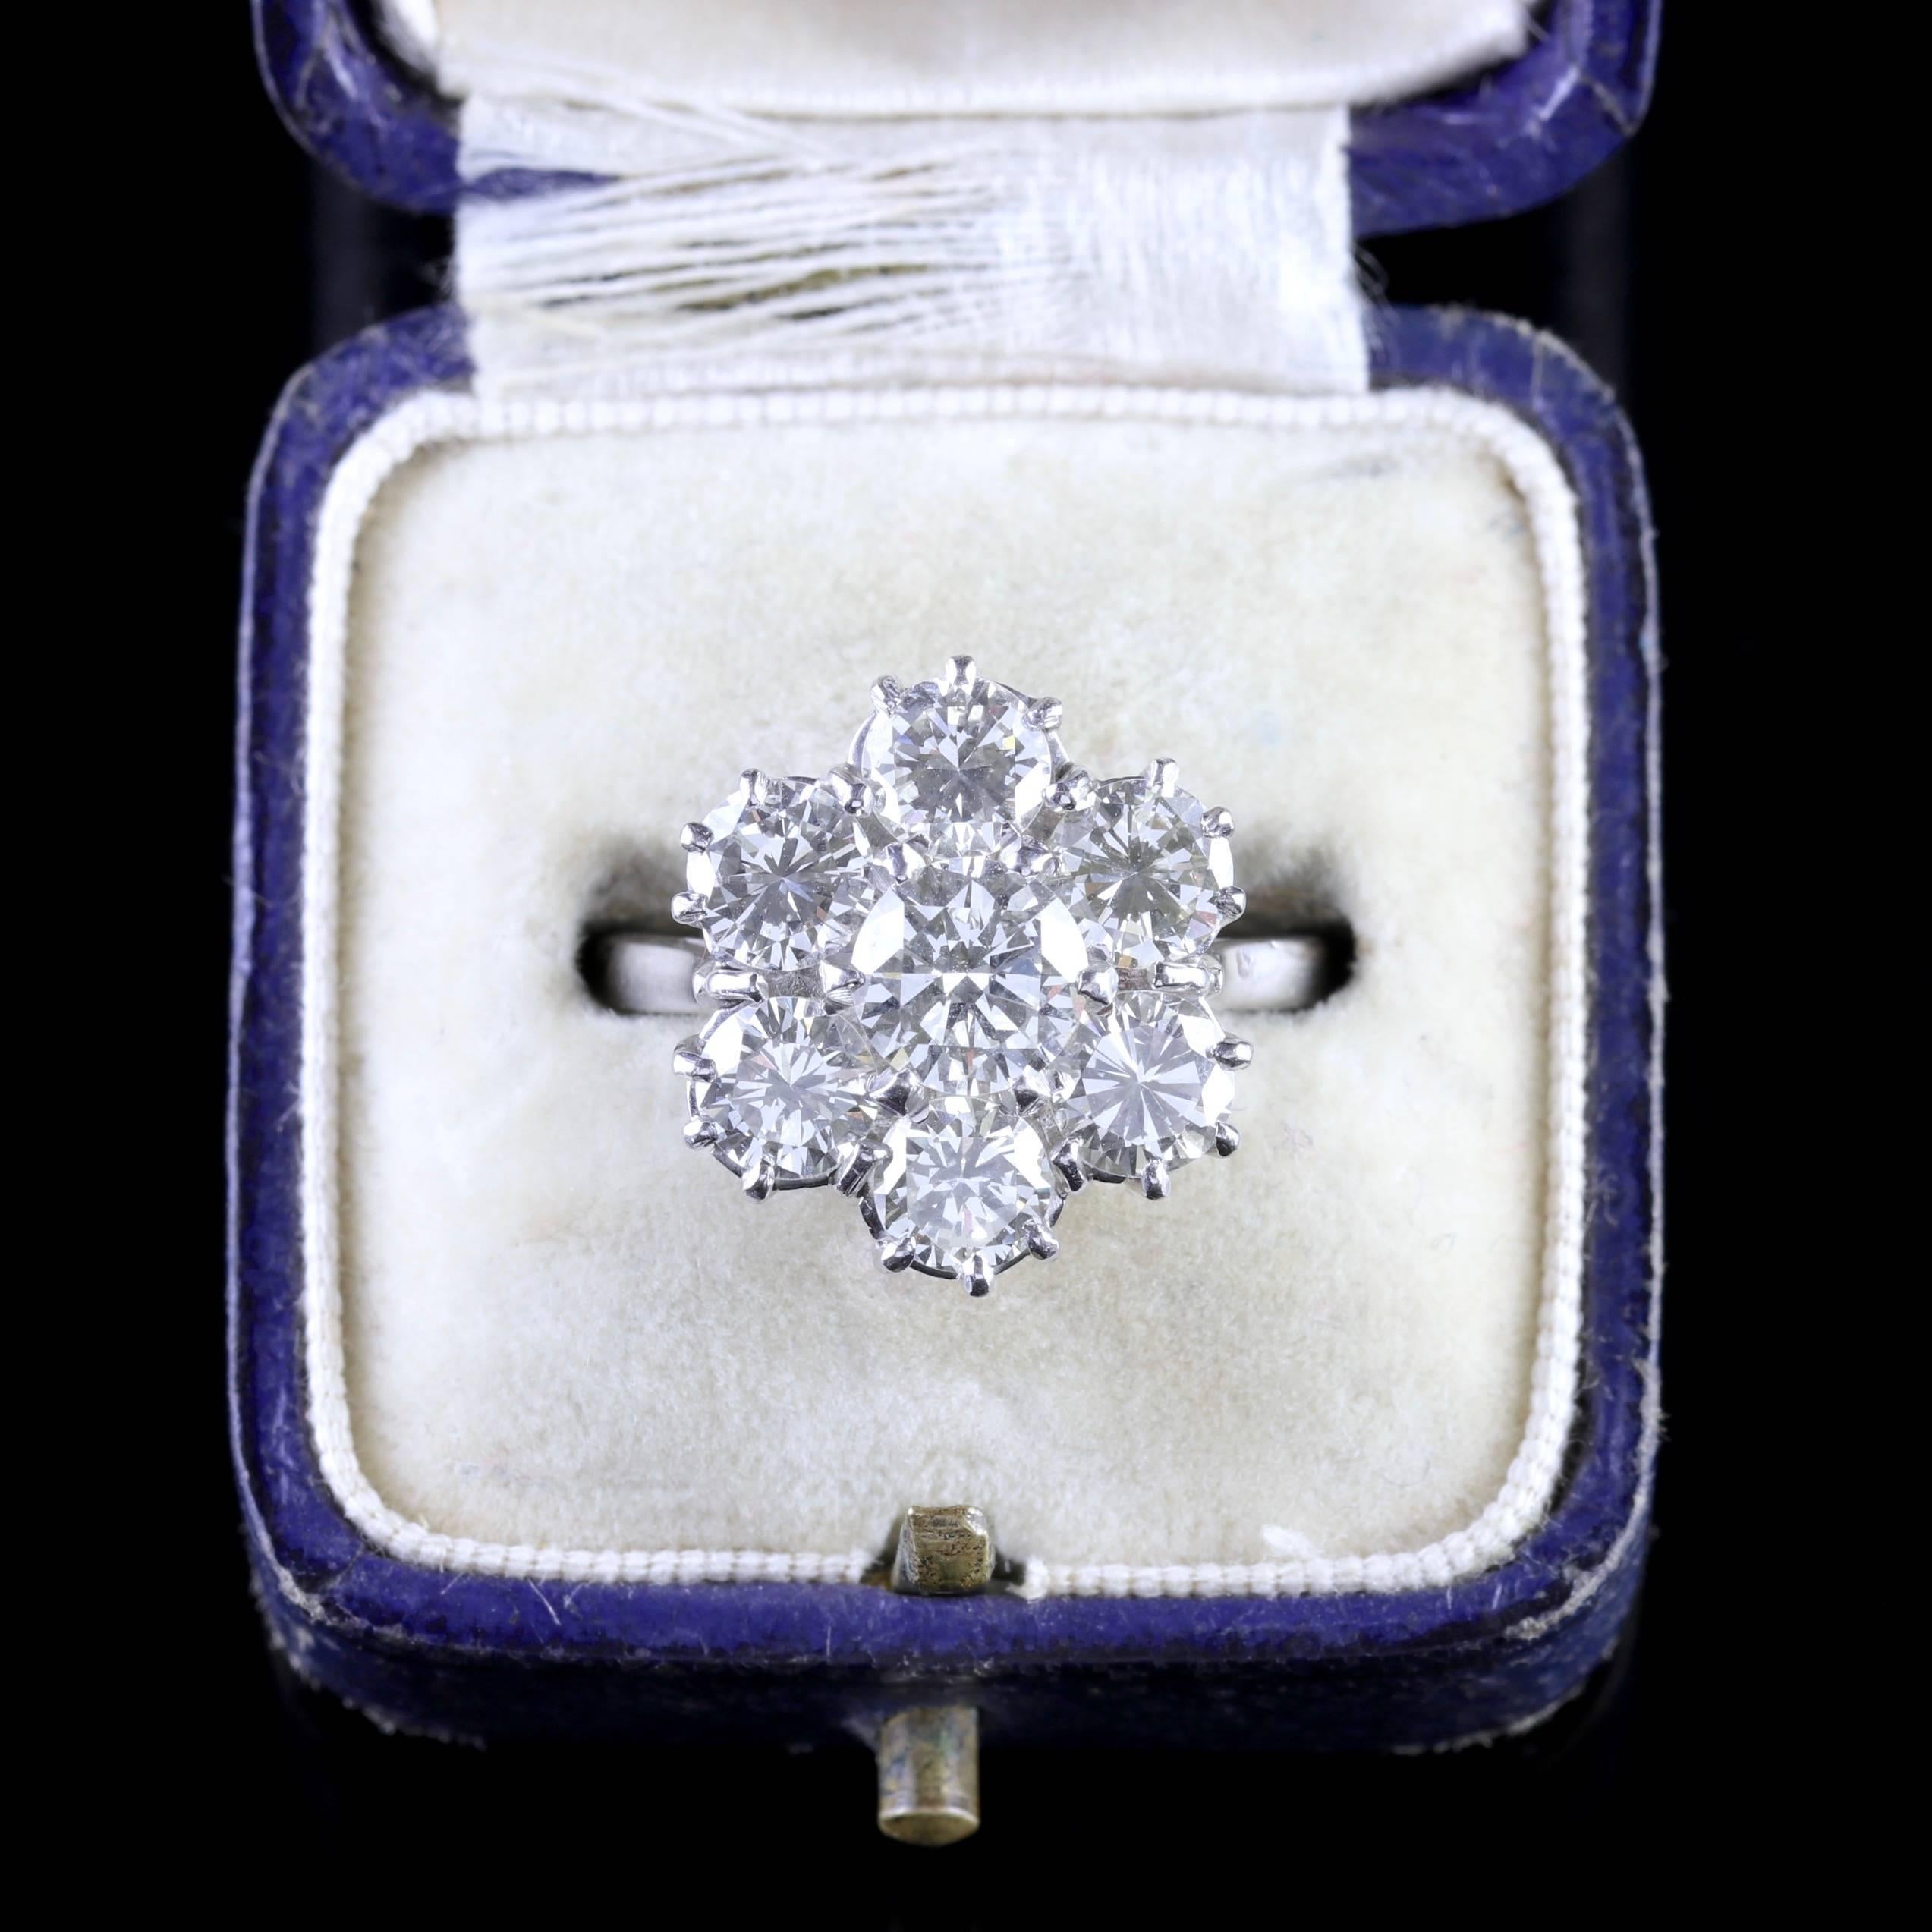  Diamond Cluster Engagement Ring 4 Carat of Diamonds Vs1 3